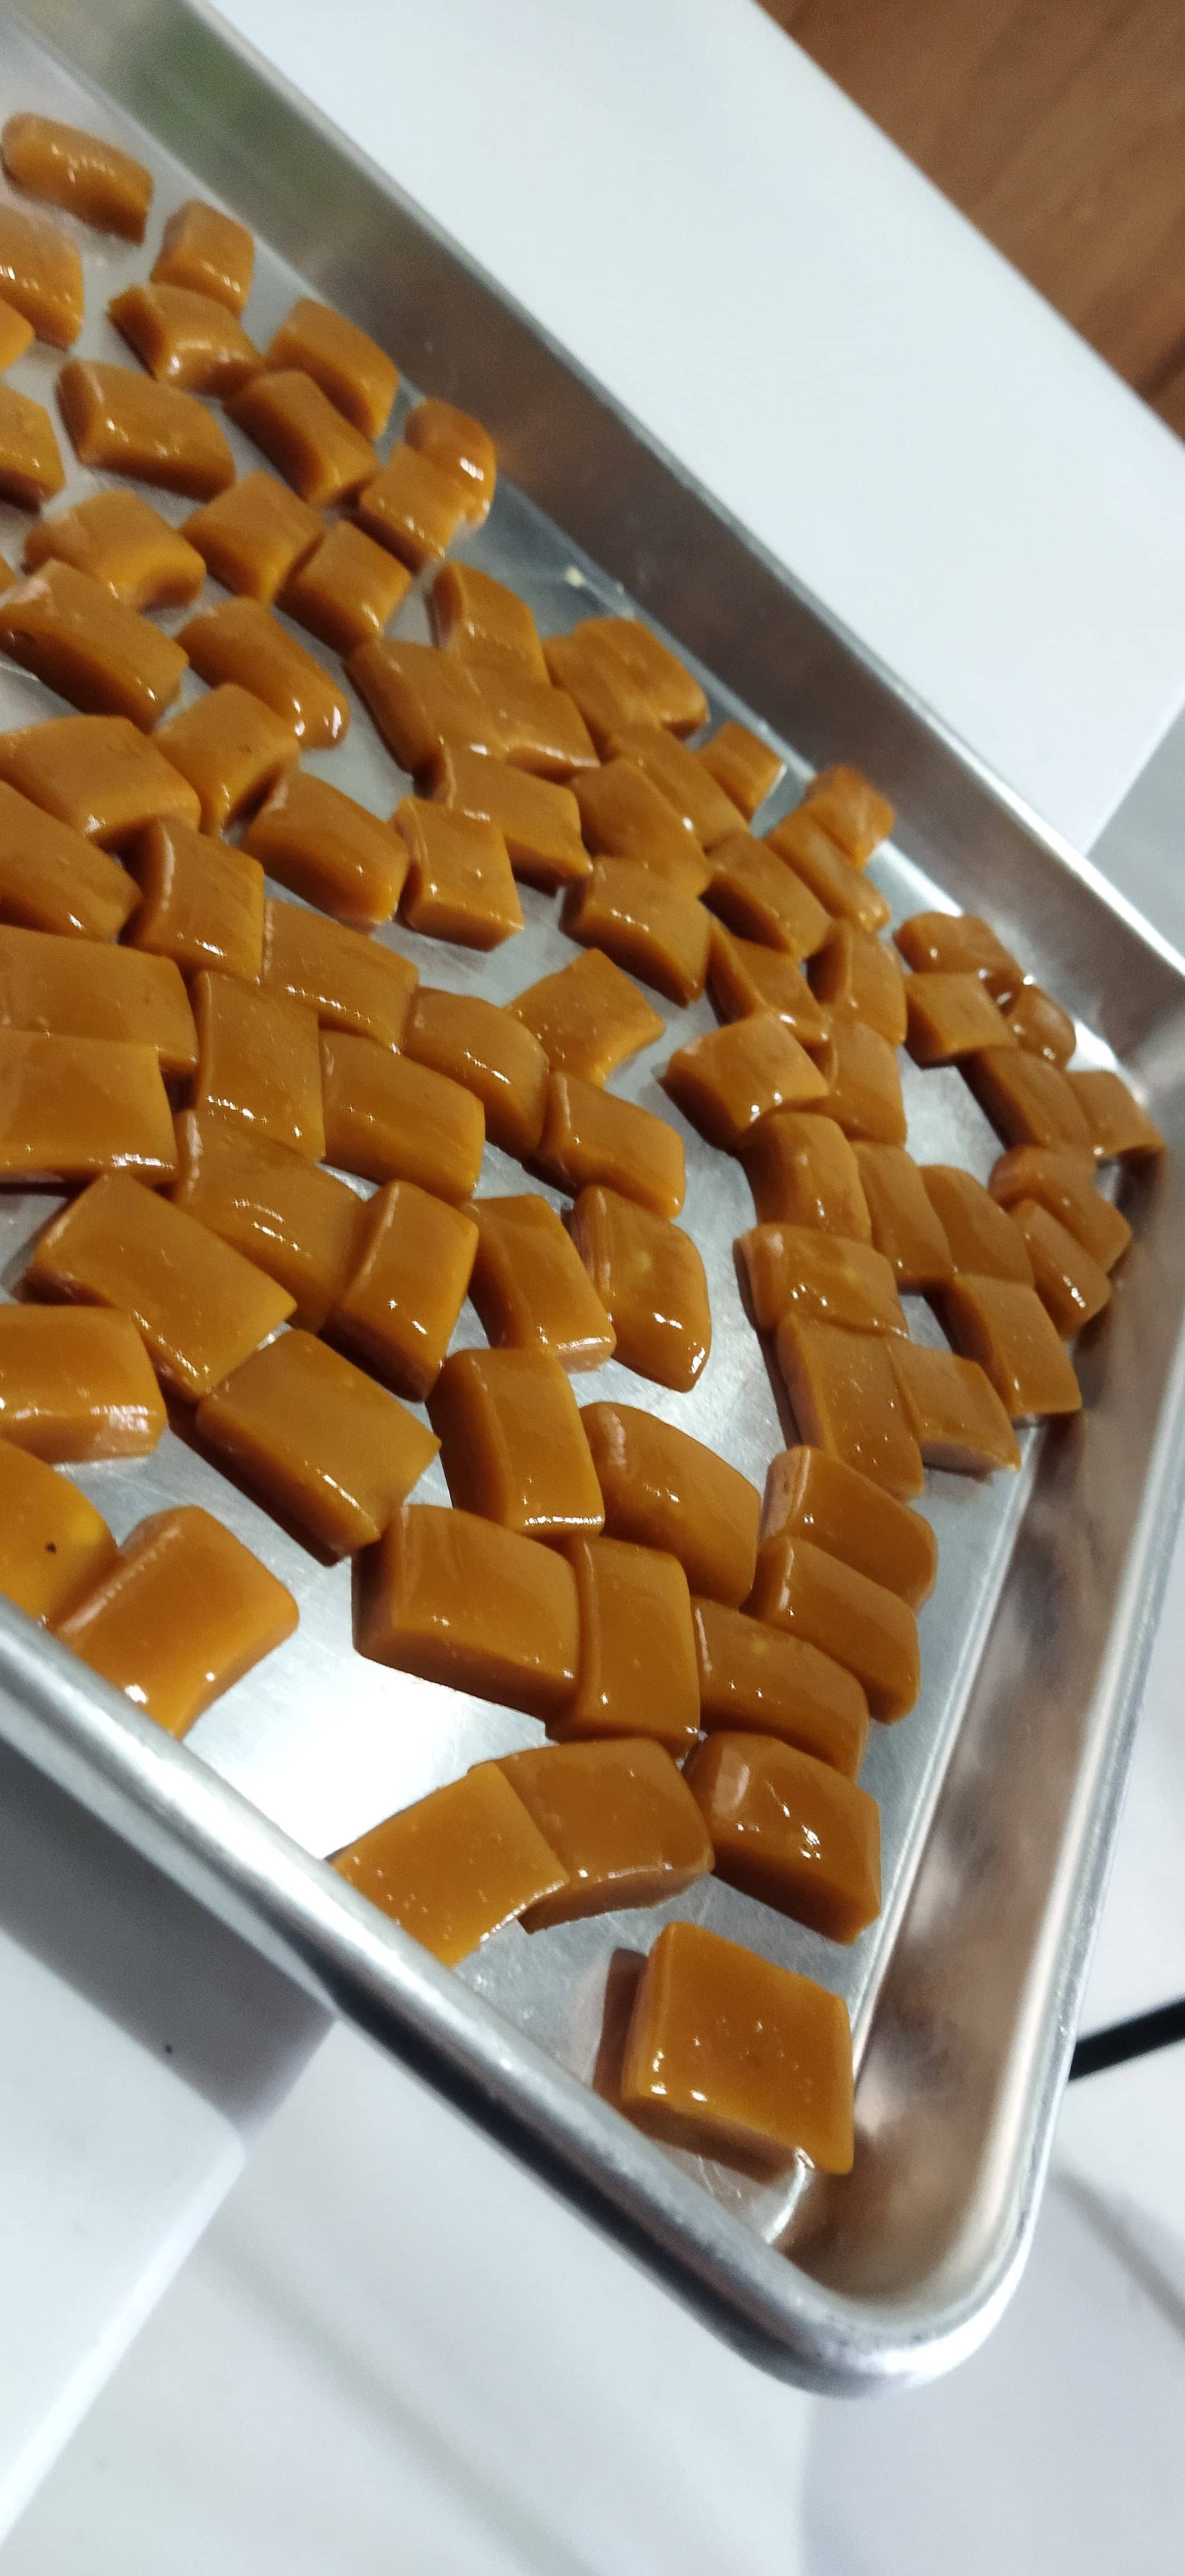 Caramelos de maracuyá y yacón x 60 Gr / 15 und. apx